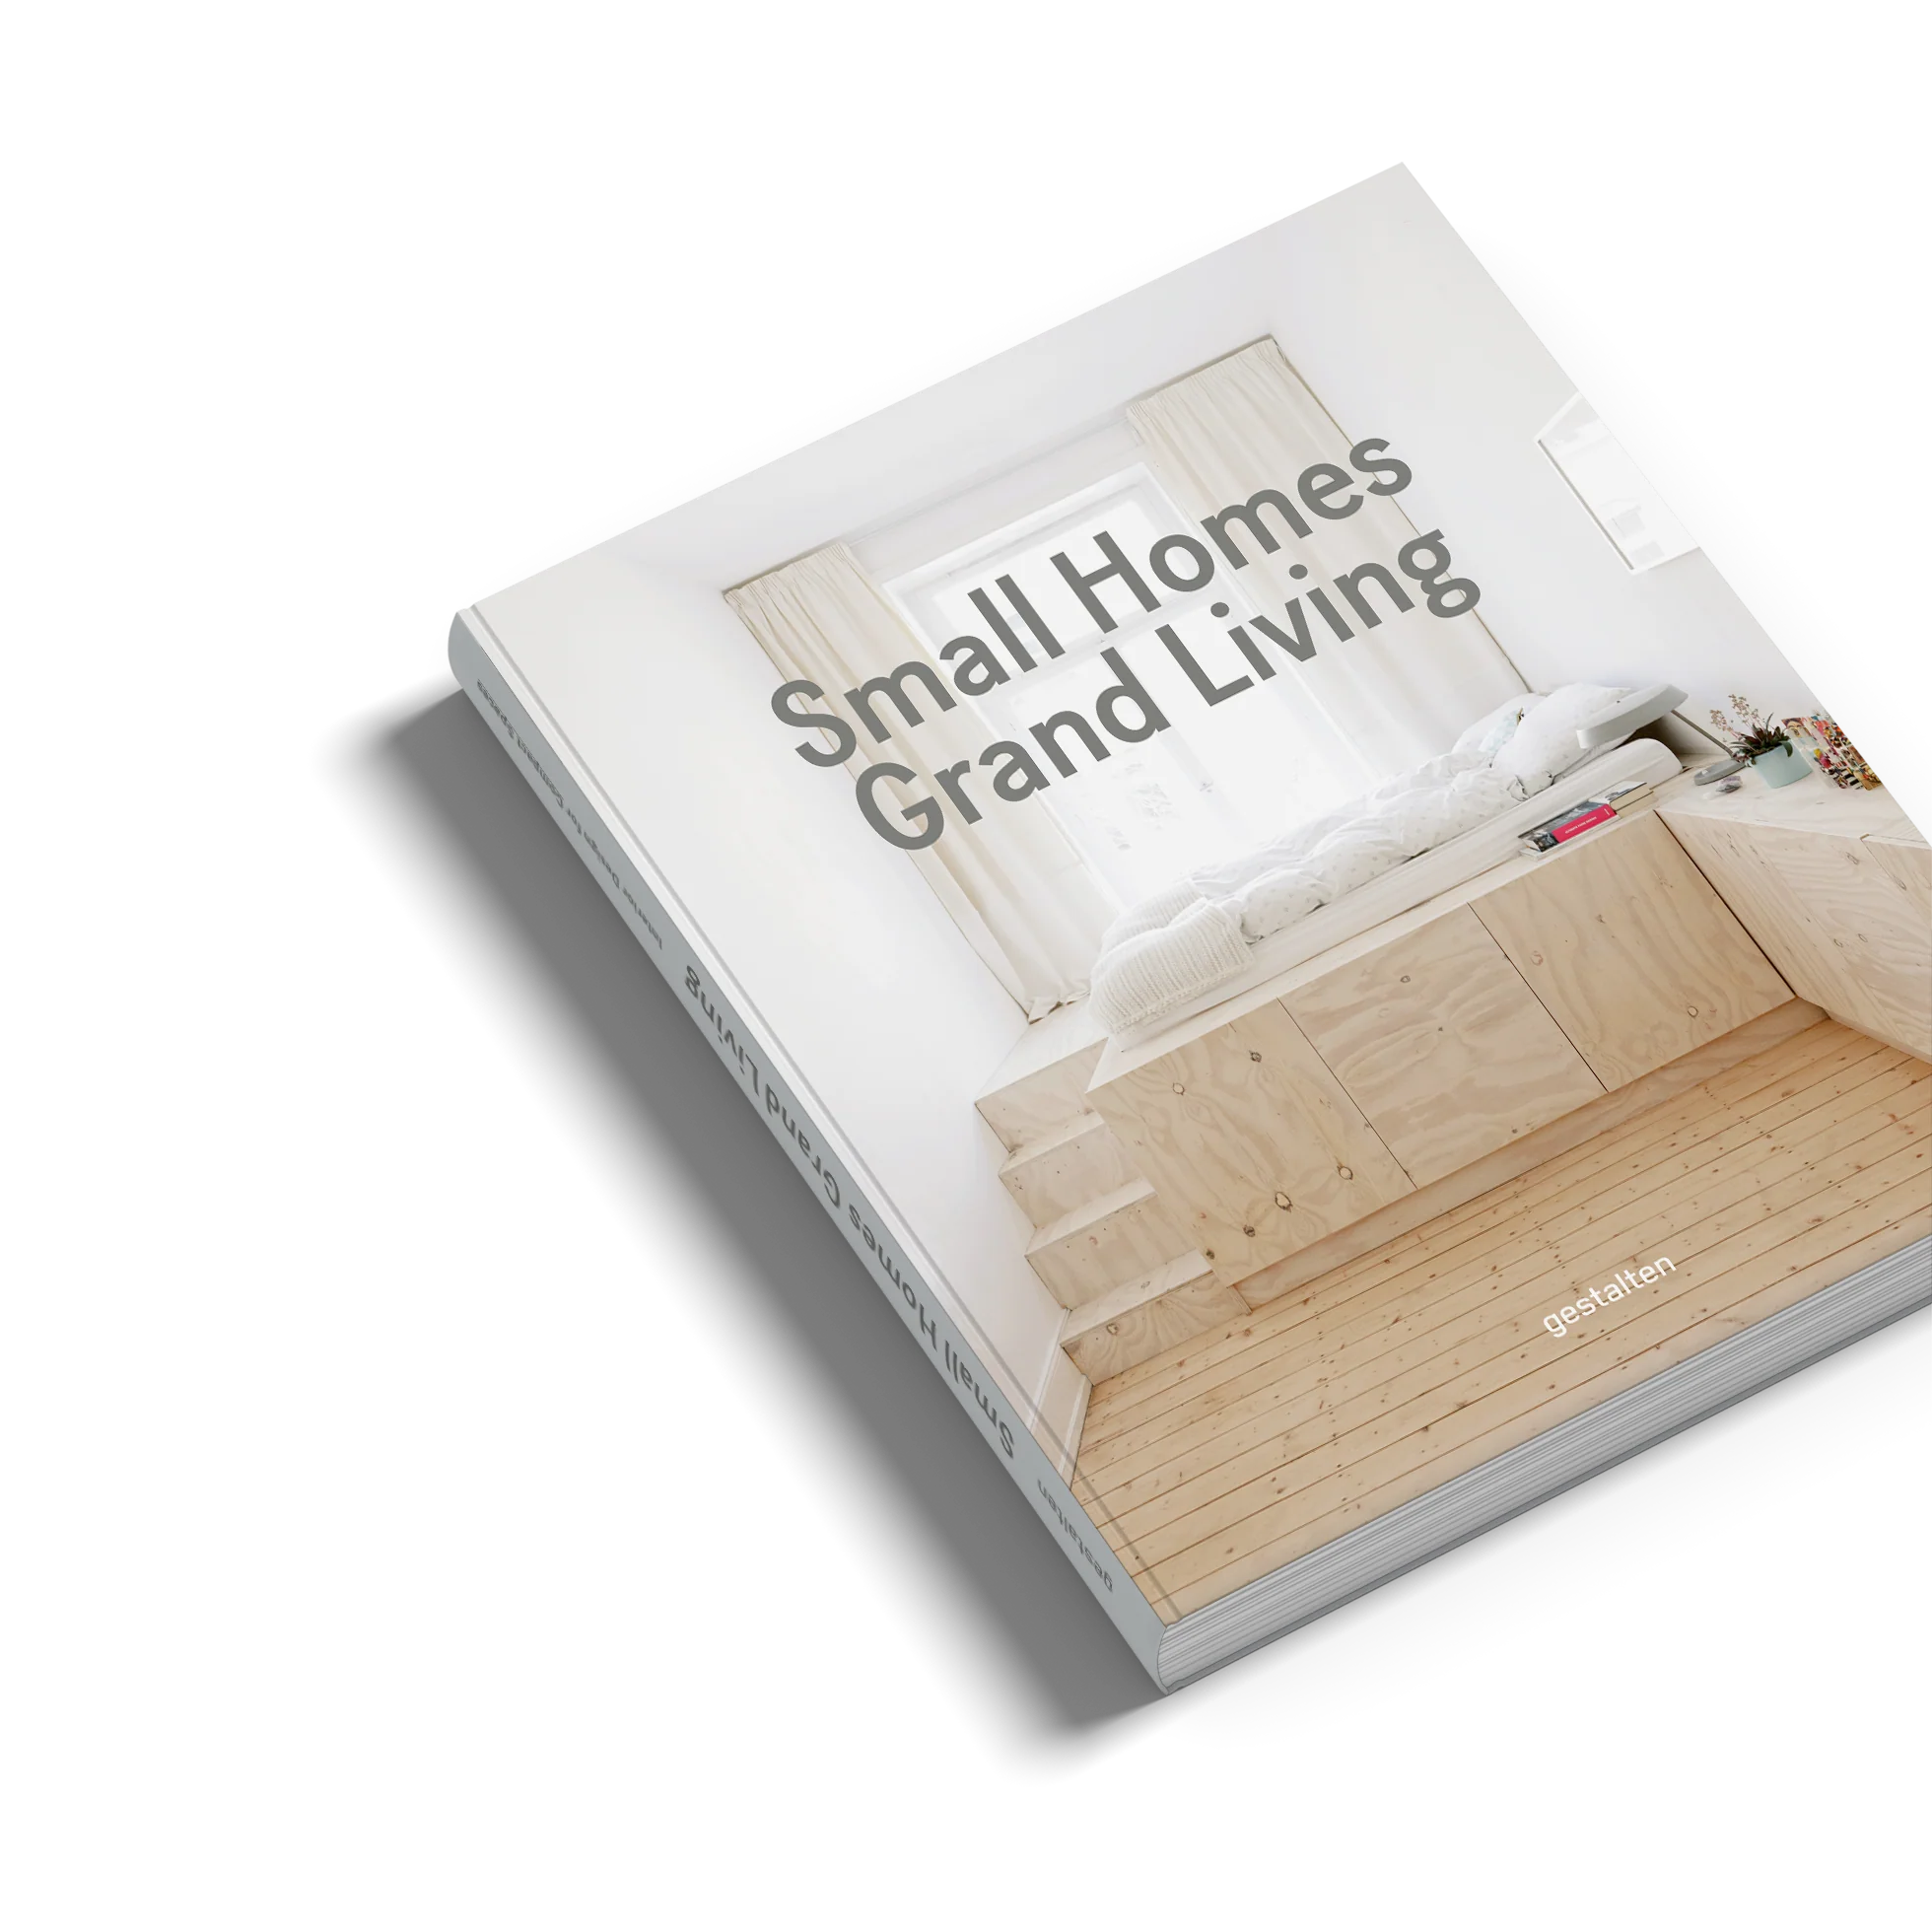 Gestalten Small Homes Grand Living Book